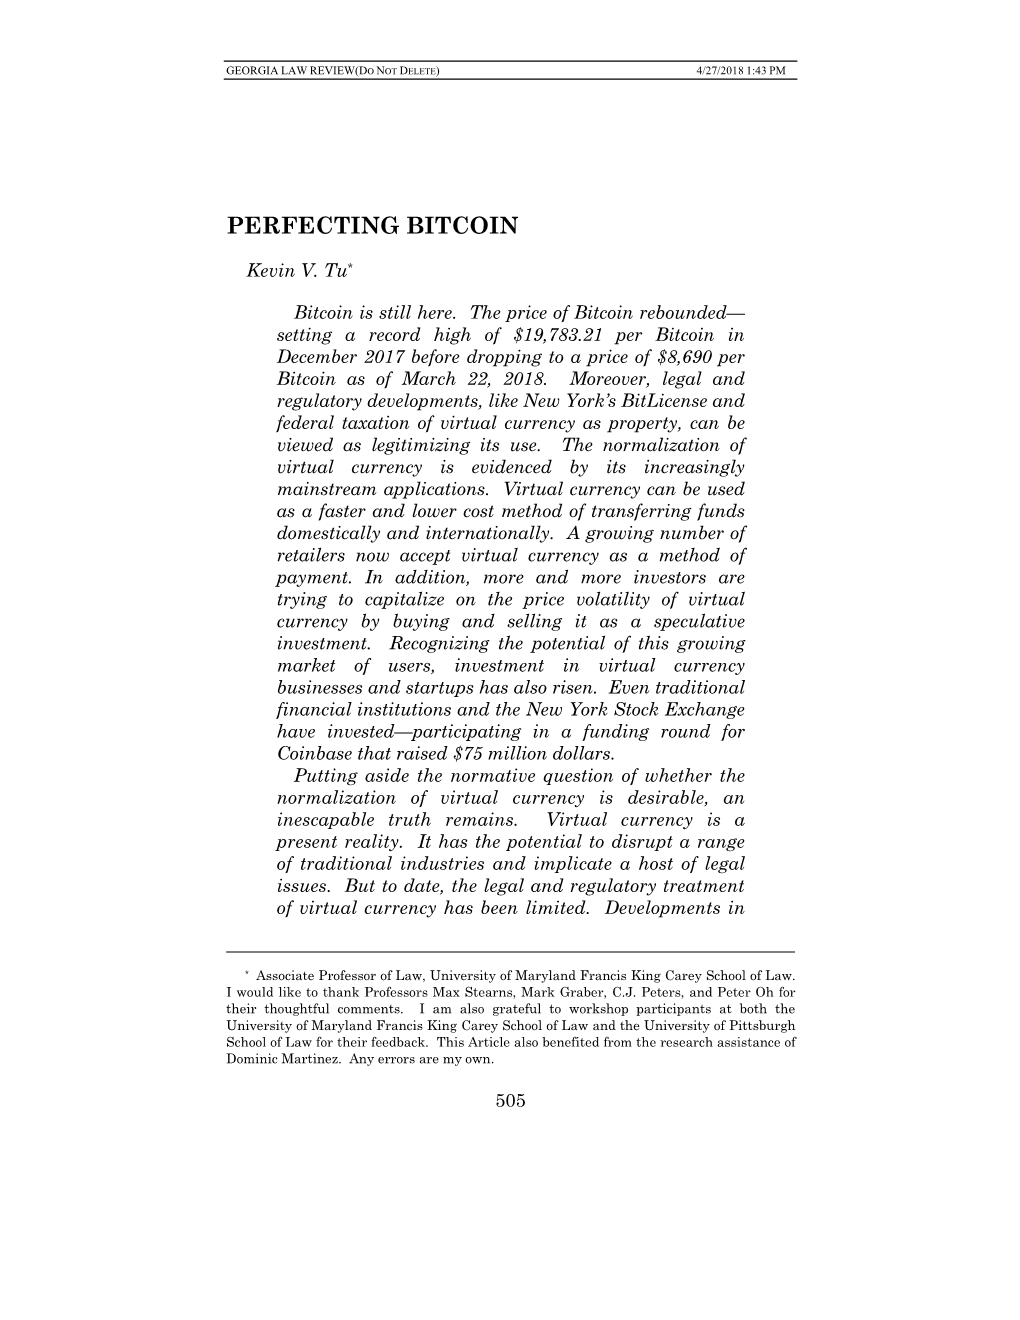 Perfecting Bitcoin